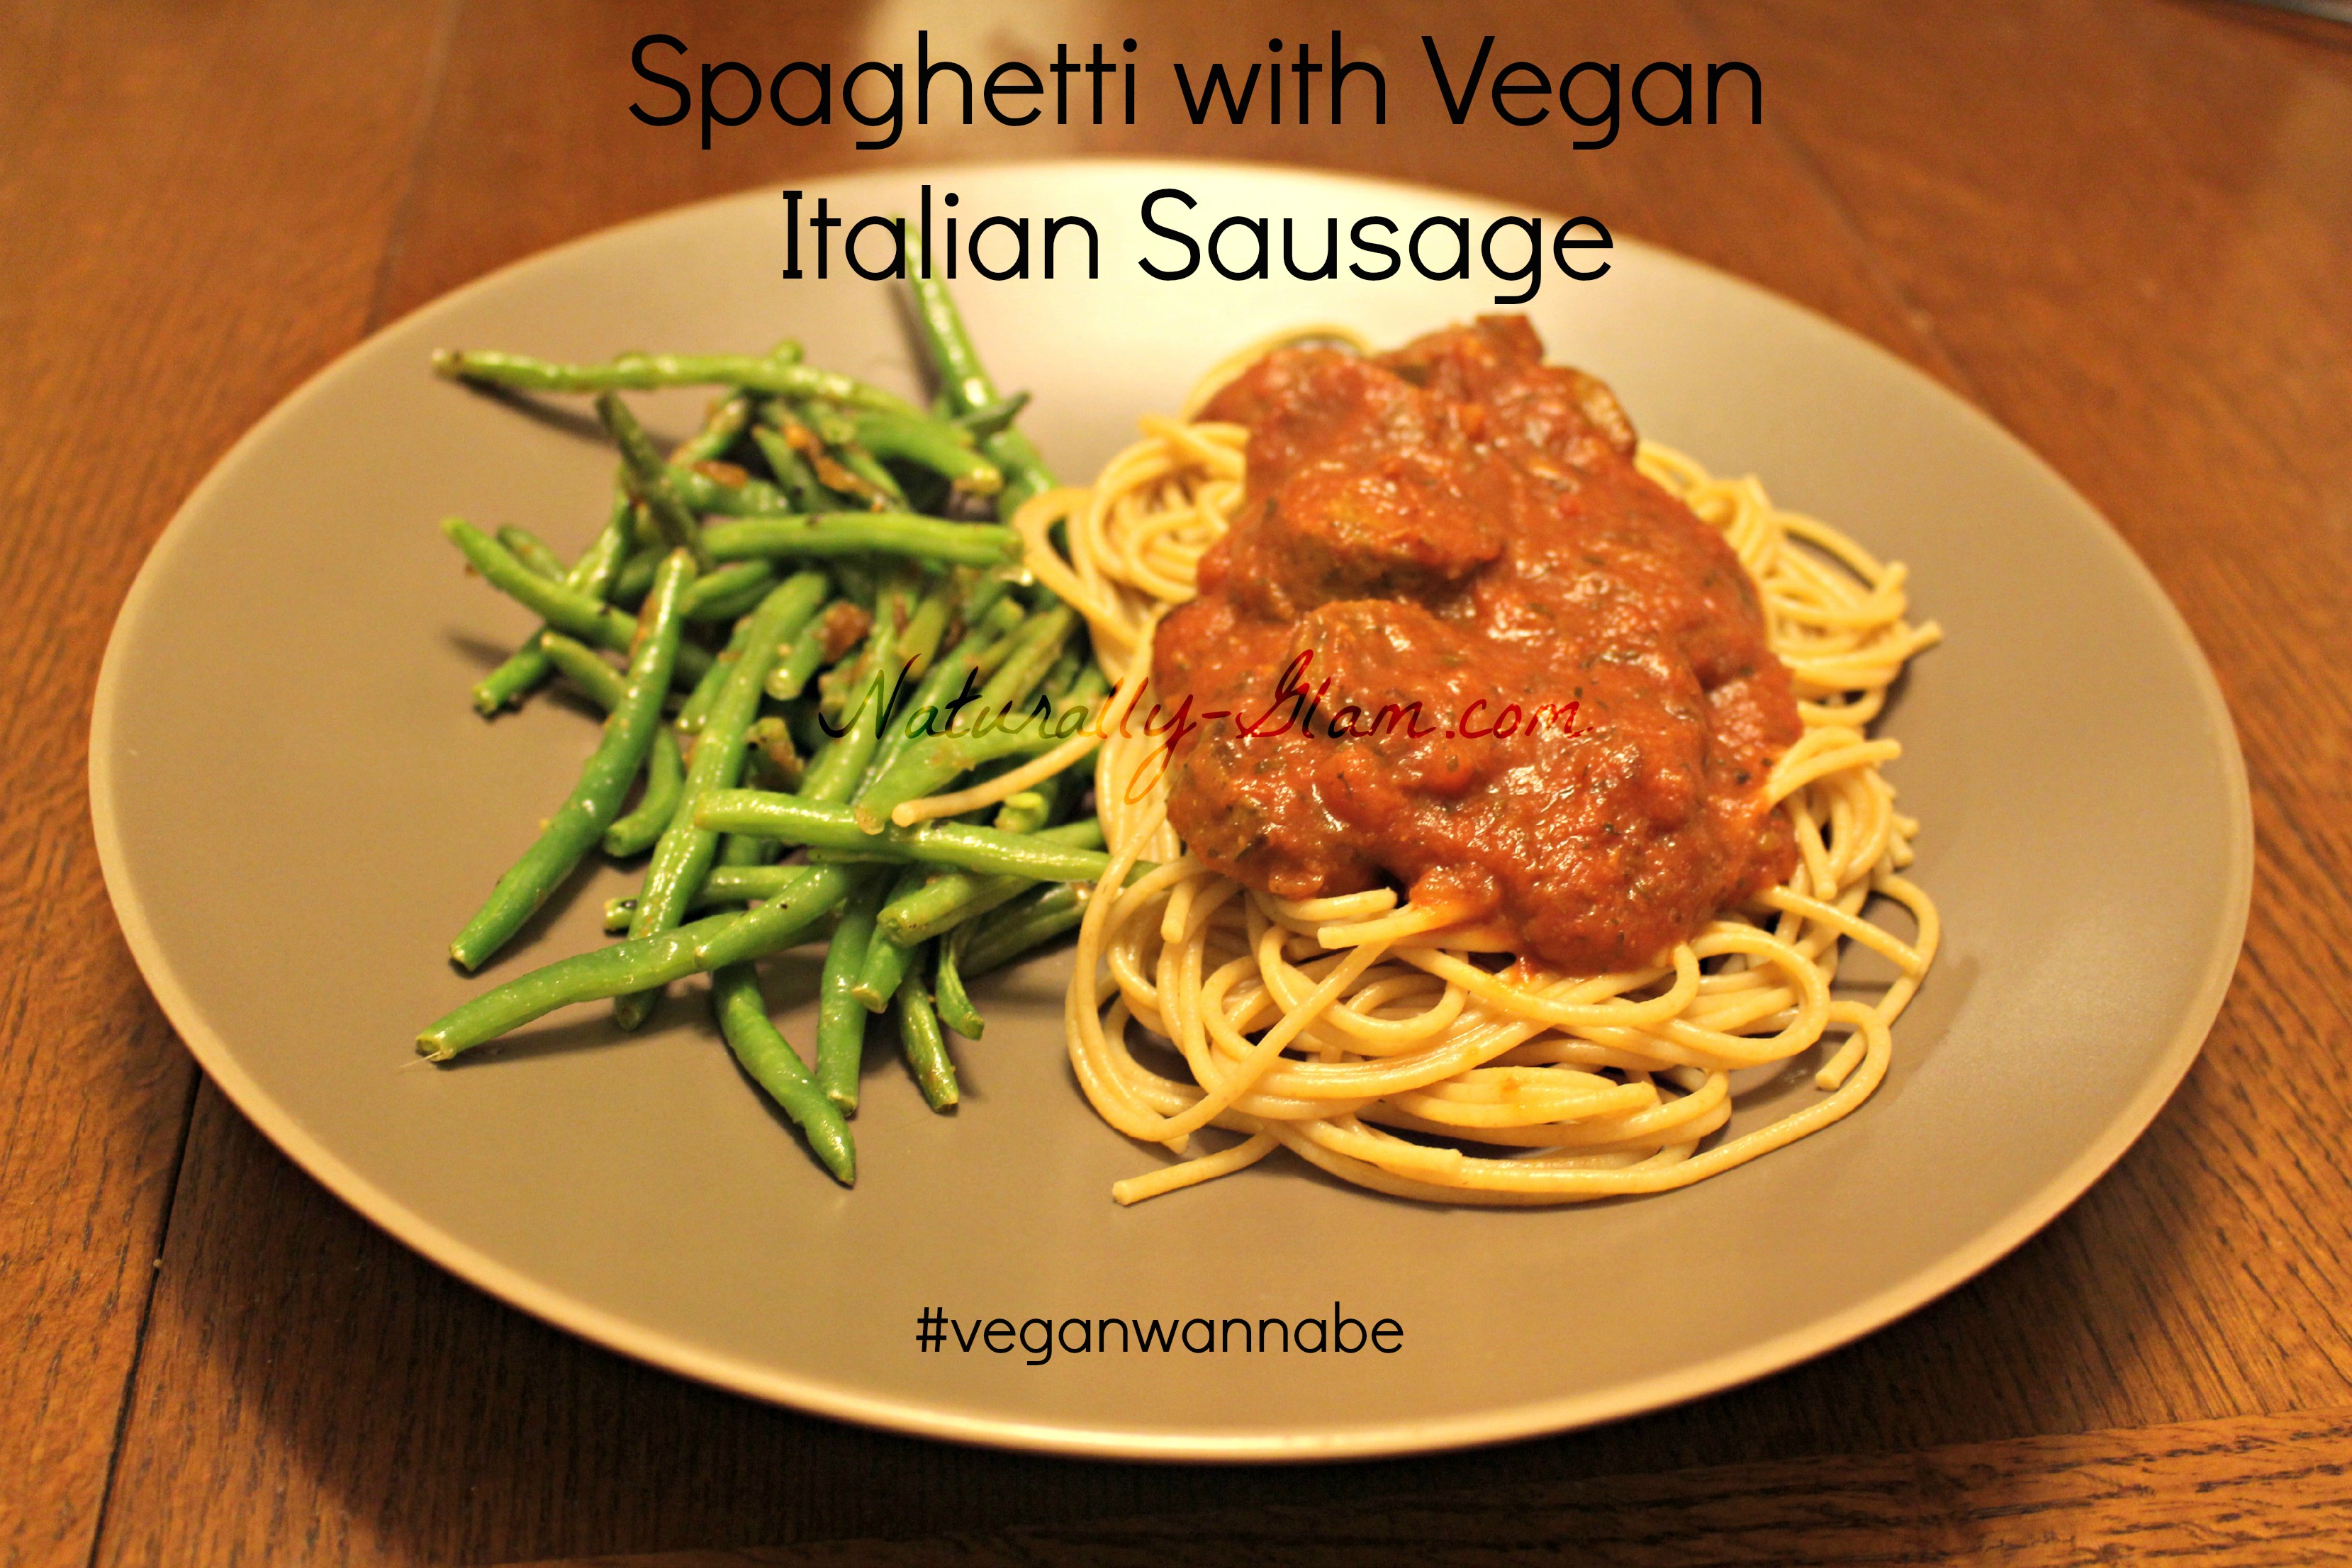 http://naturally-glam.com/wp-content/uploads/2014/11/Spaghetti-Vegan-Sausage-YT.jpg